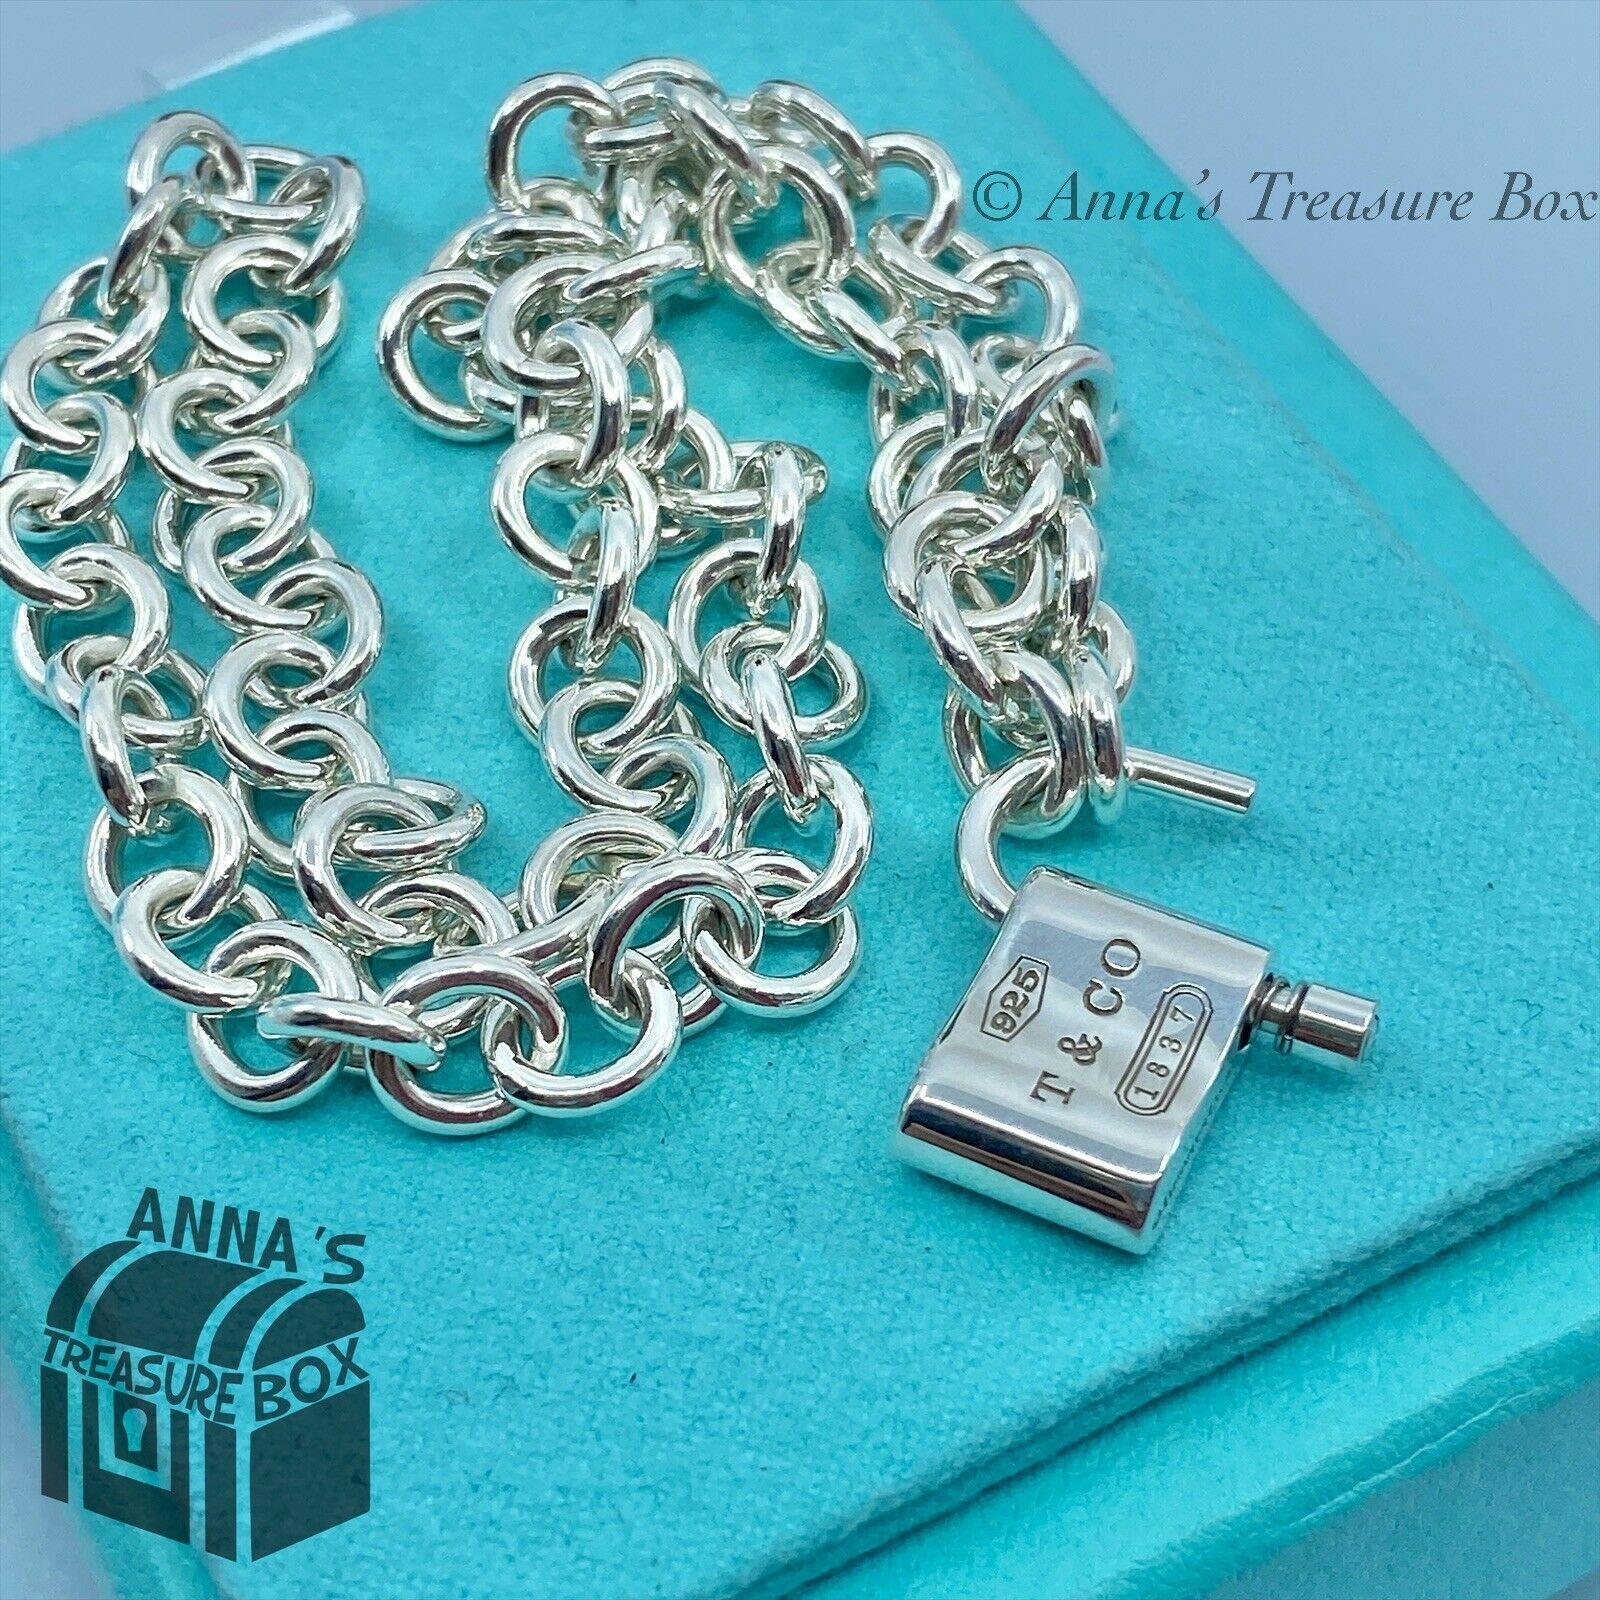 Tiffany & Co. 1837 Lock Padlock Pendant Necklace 16 Silver 925